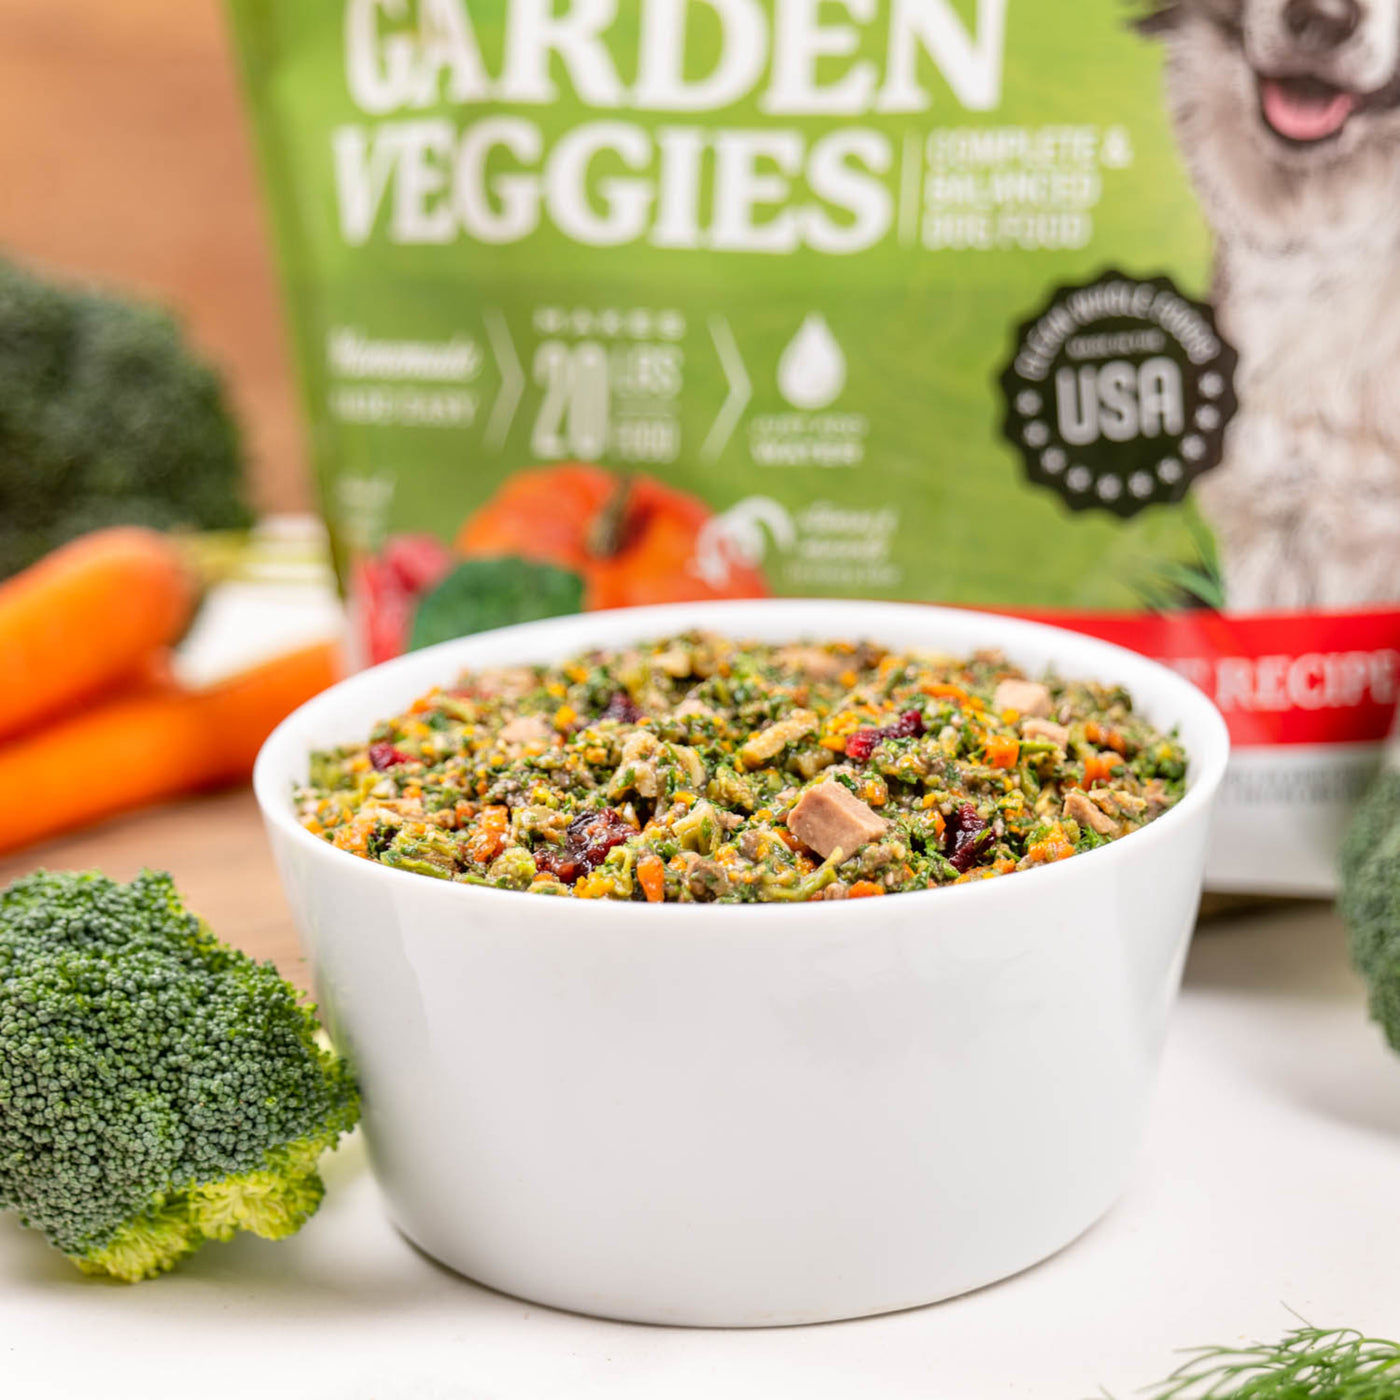 Dr. Harvey's Dog Food - Garden Veggies Whole Grain Beef *